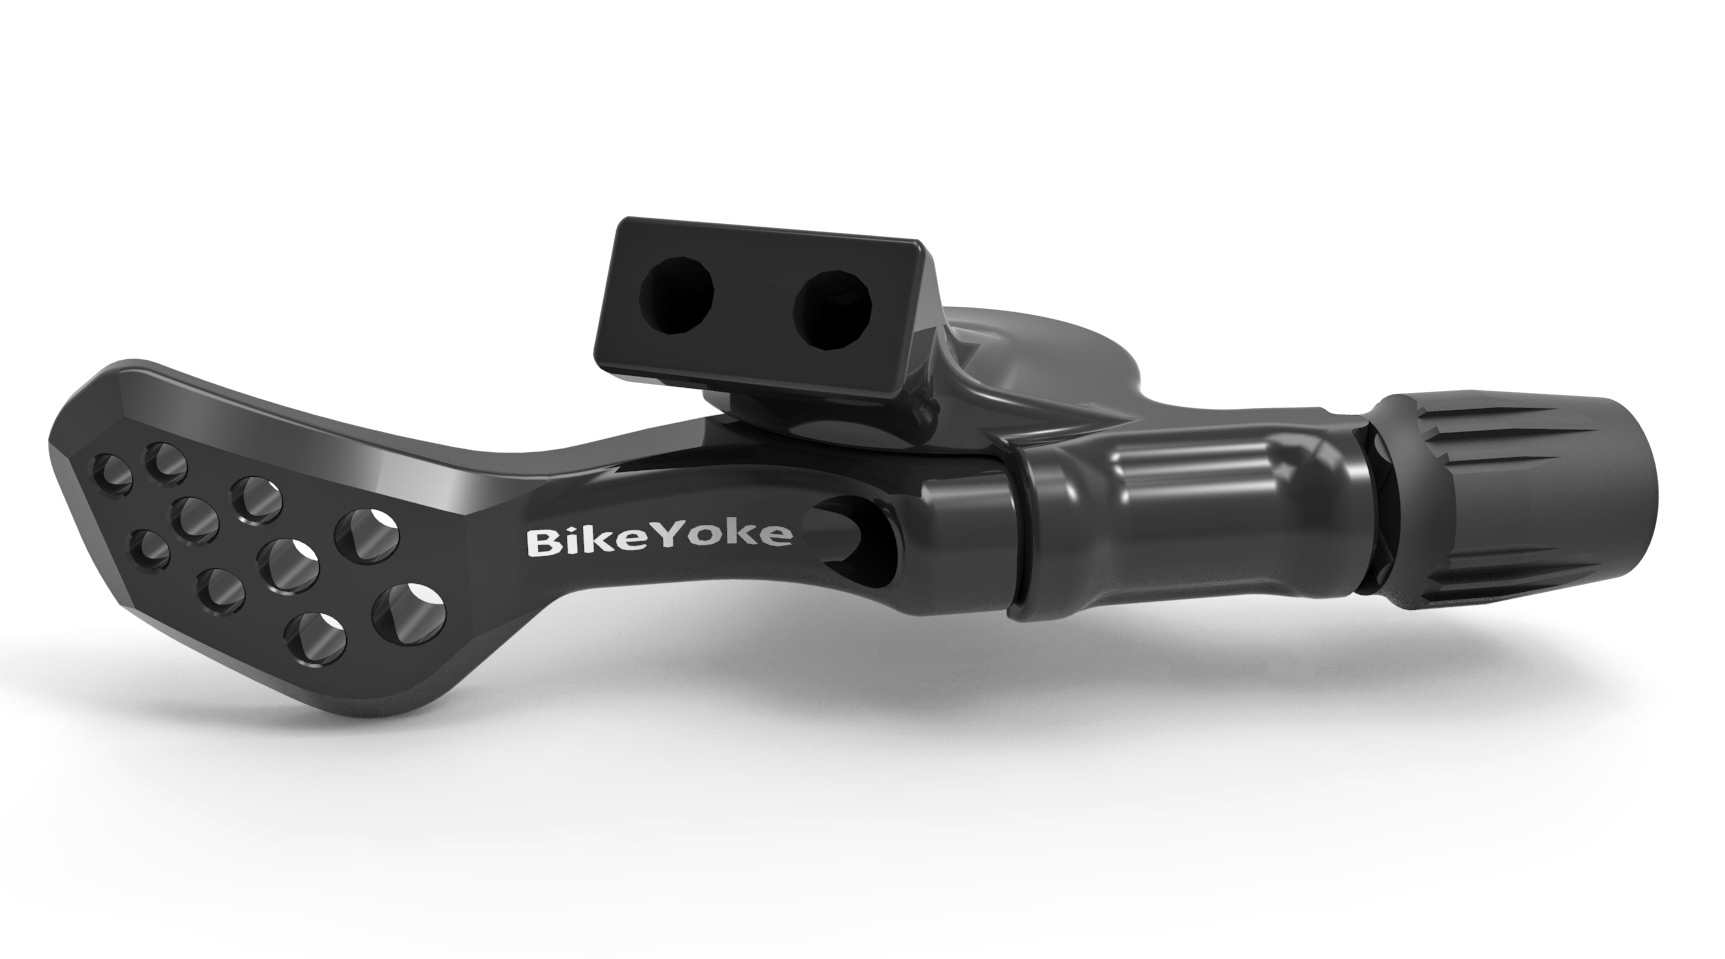 BikeYoke offers new shifter-style Triggy dropper post remote